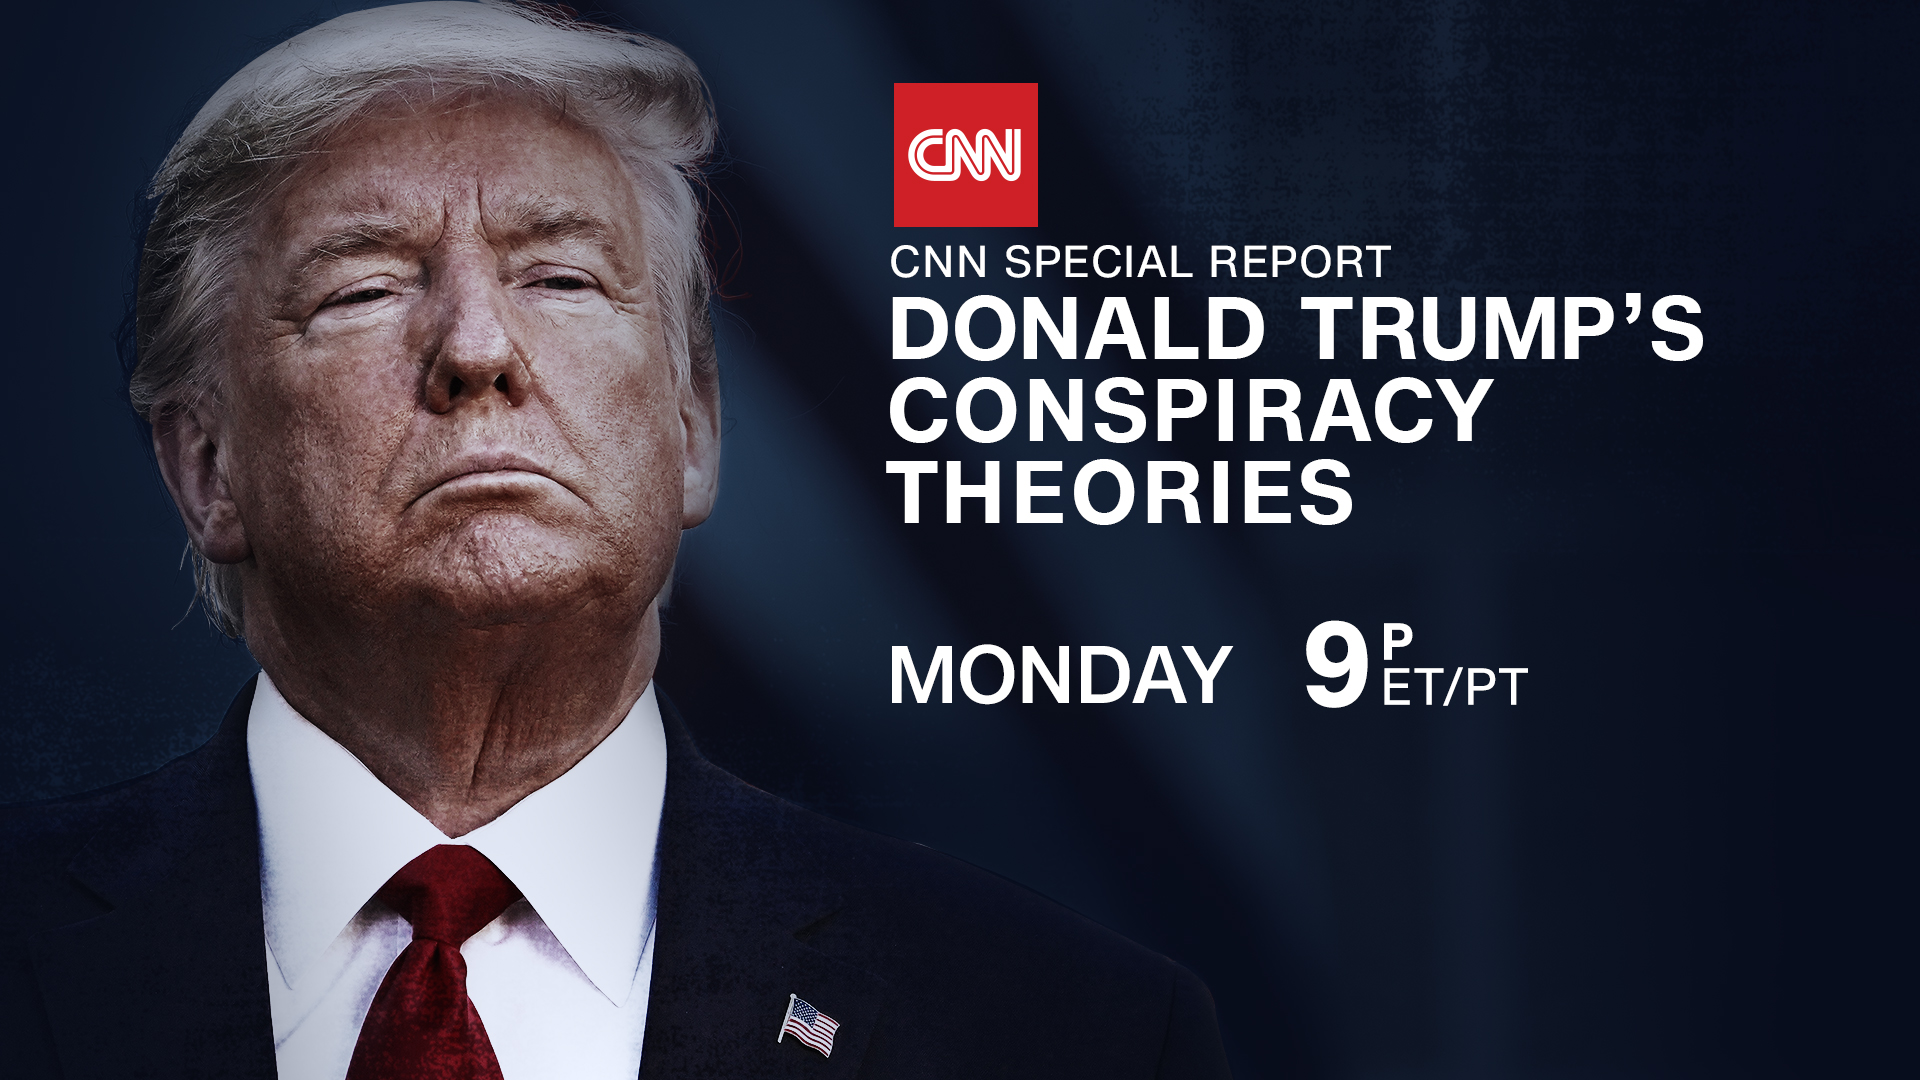 Cnns Fareed Zakaria Examines Donald Trumps Conspiracy Theories